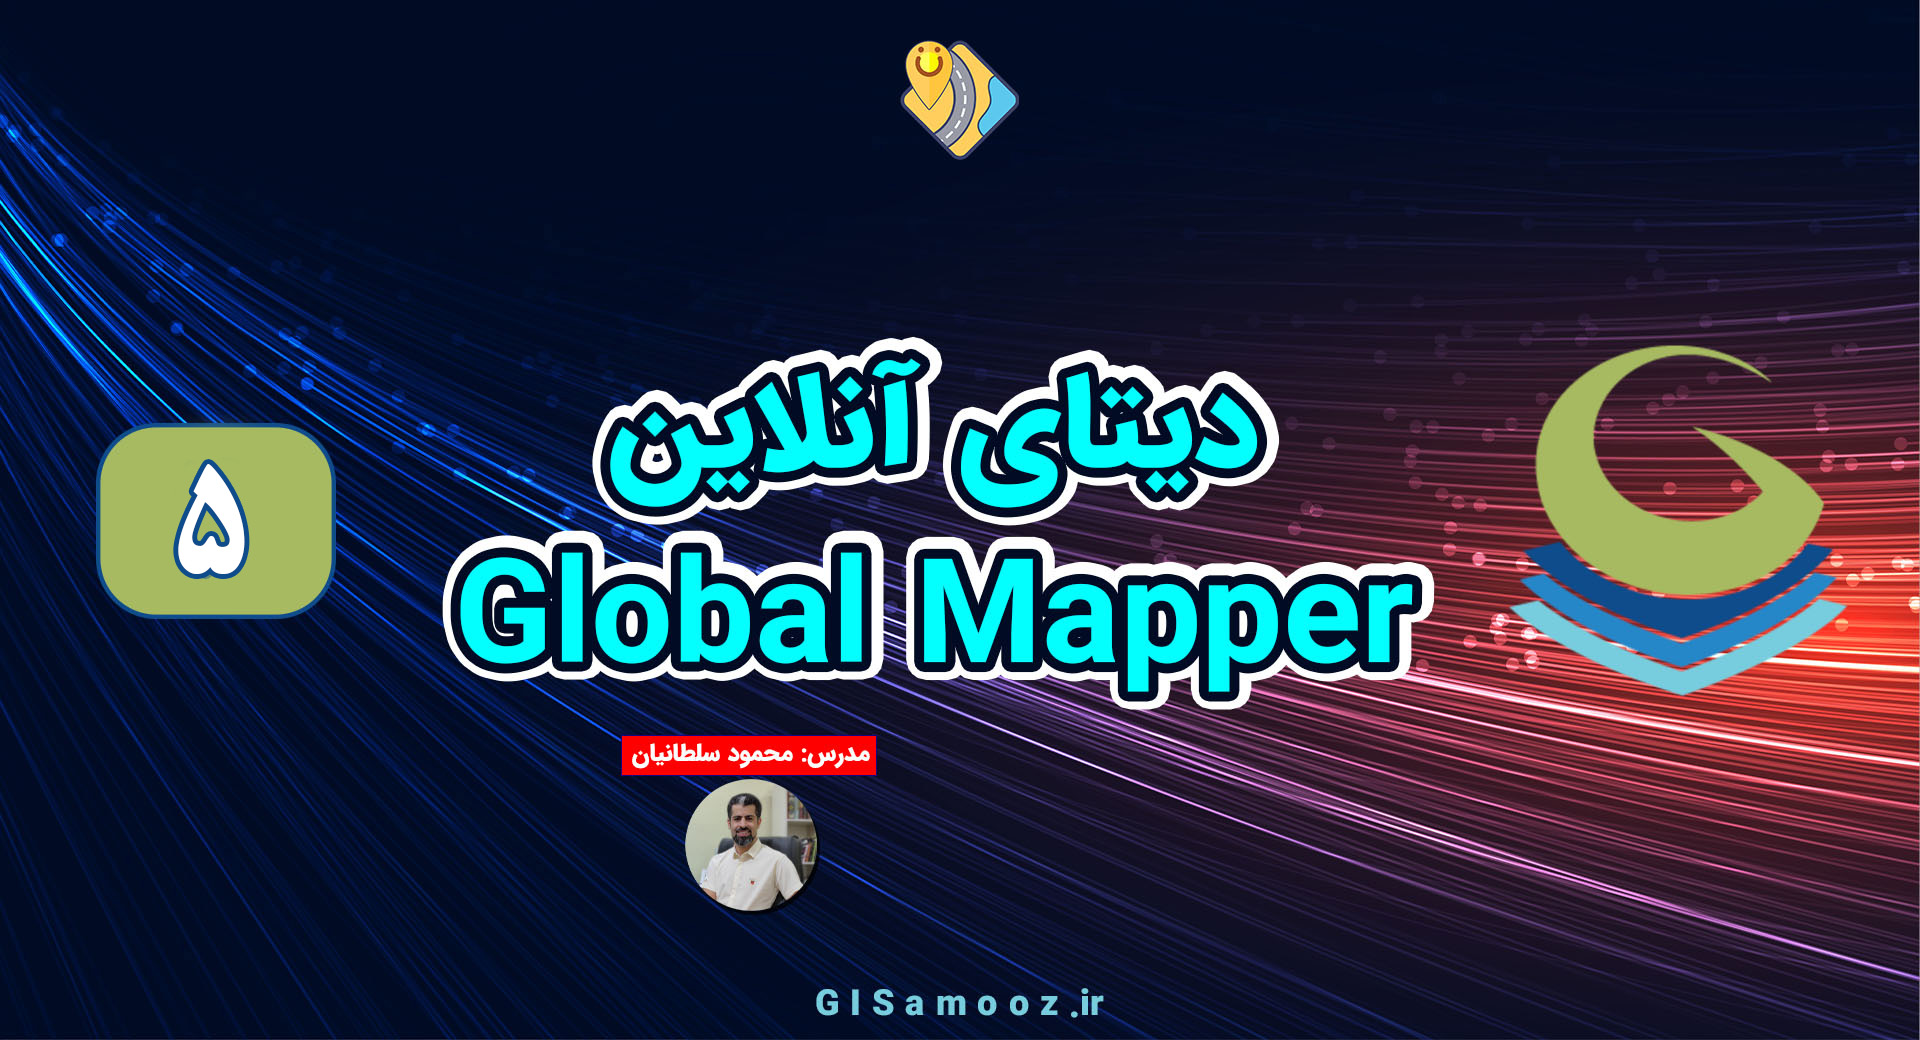 دیتای آنلاین در گلوبال مپر Global Mapper